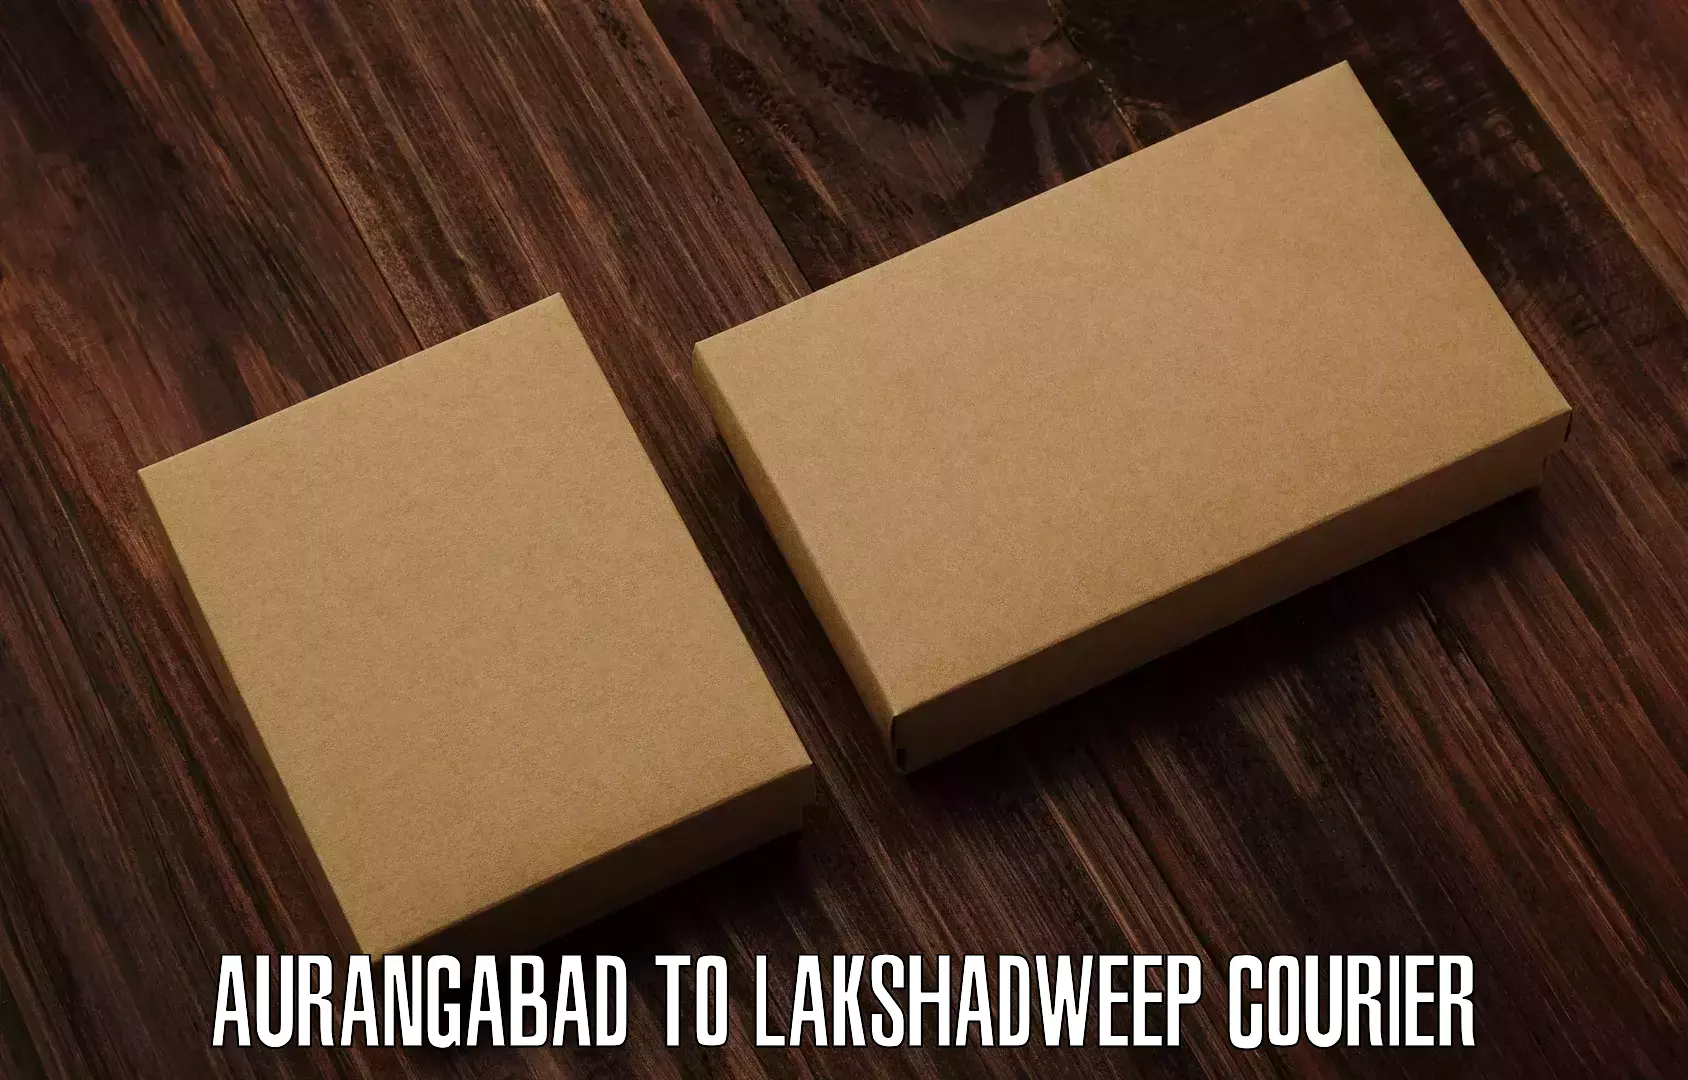 Express delivery network Aurangabad to Lakshadweep